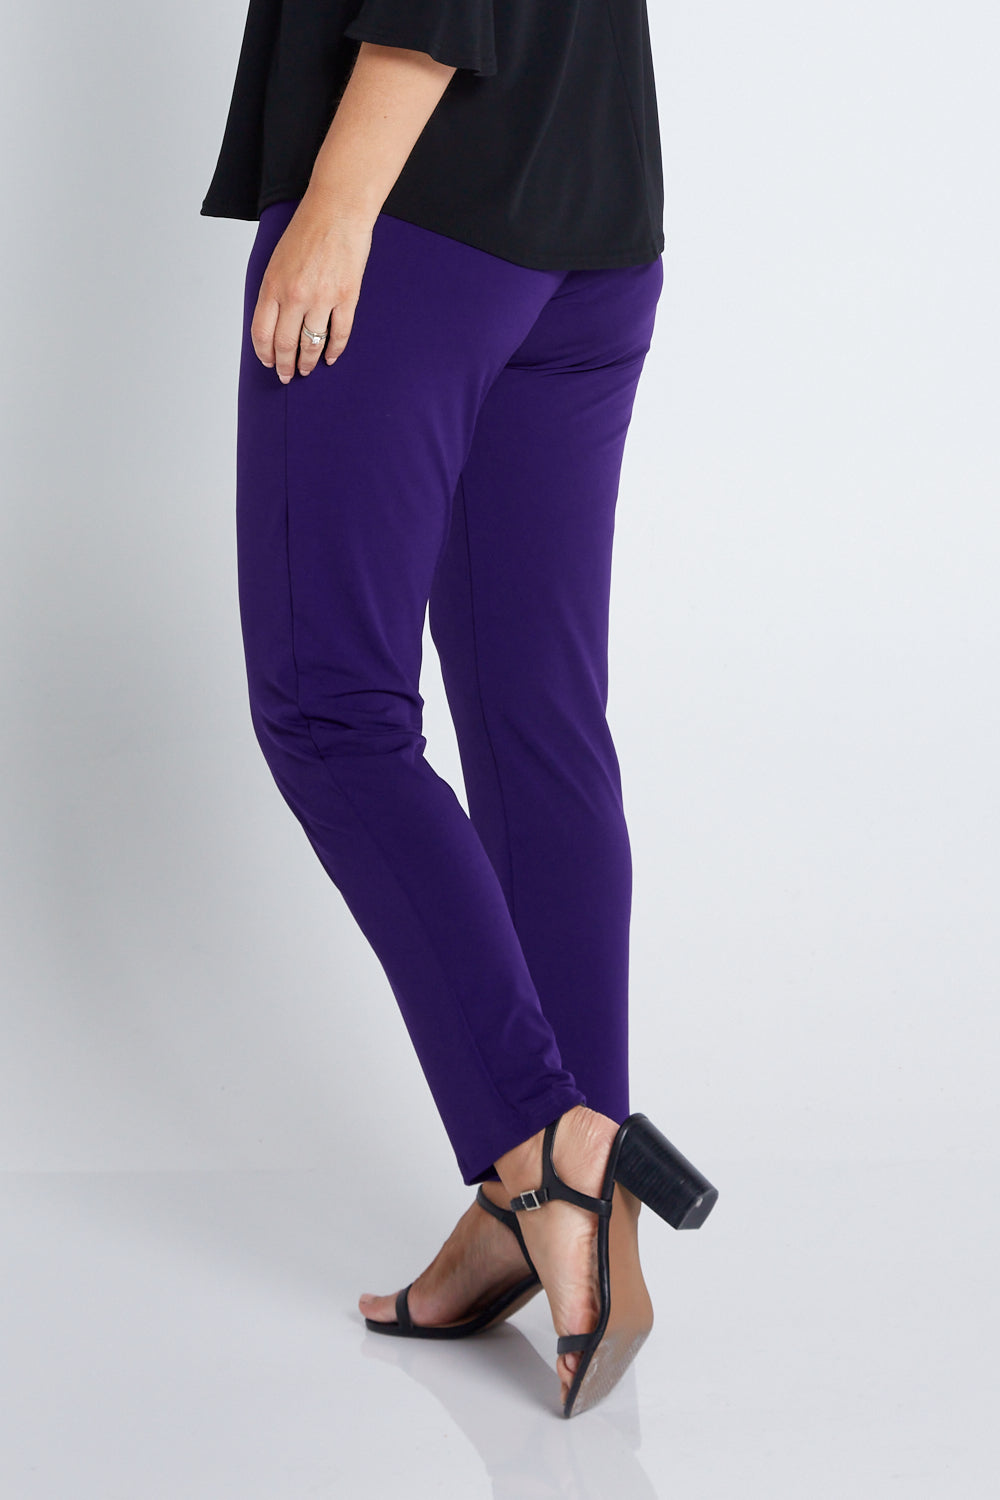 TULIO for Mature Fashion, Gianna Pants - Purple